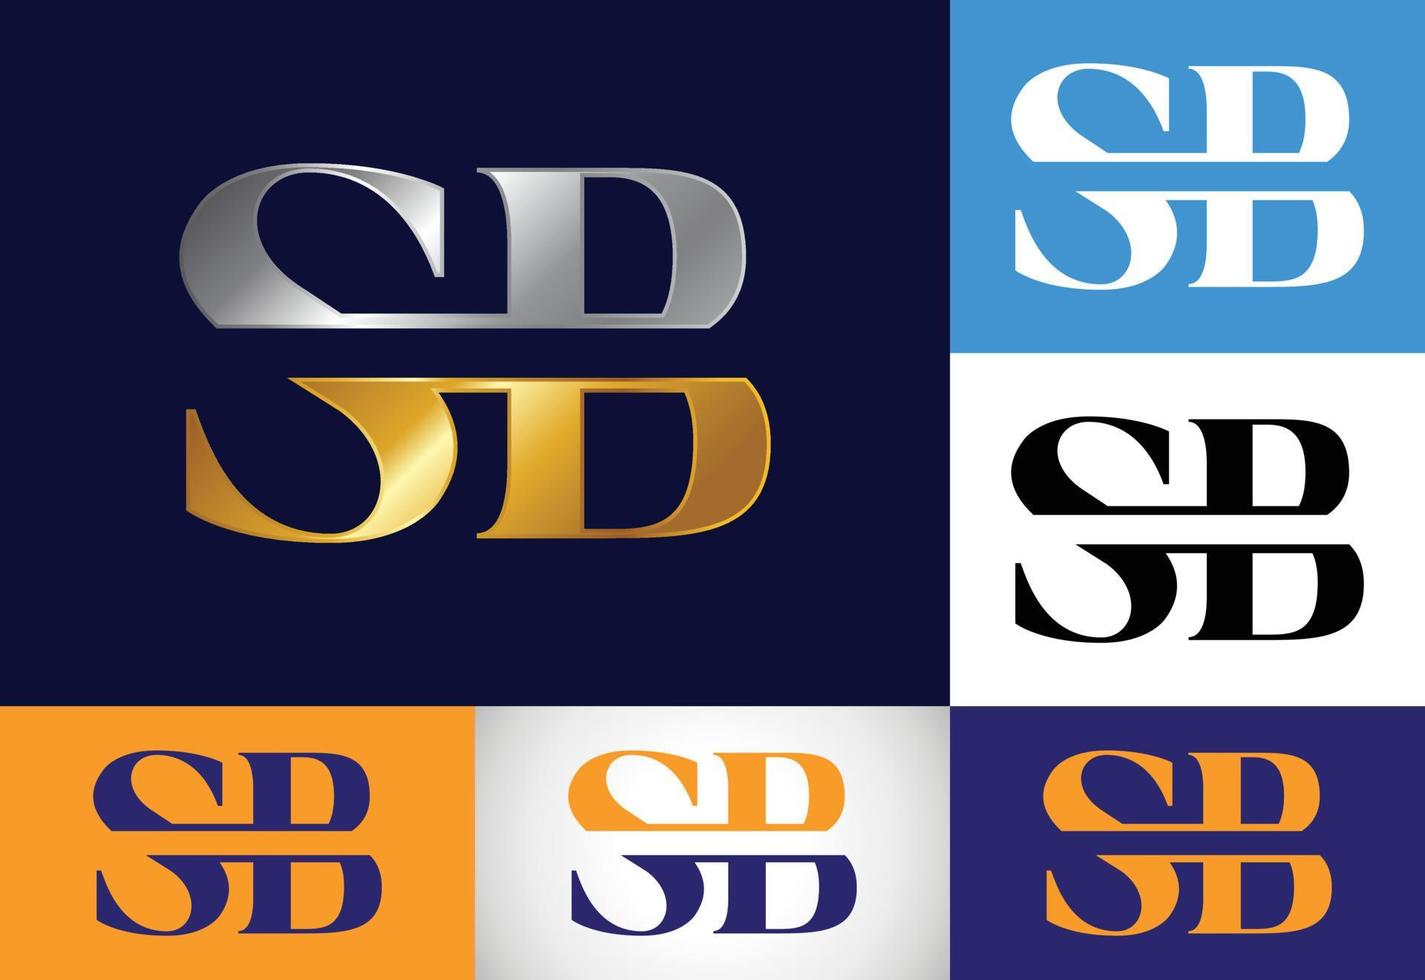 vetor de design de logotipo de letra inicial sb. símbolo gráfico do alfabeto para identidade de negócios corporativos